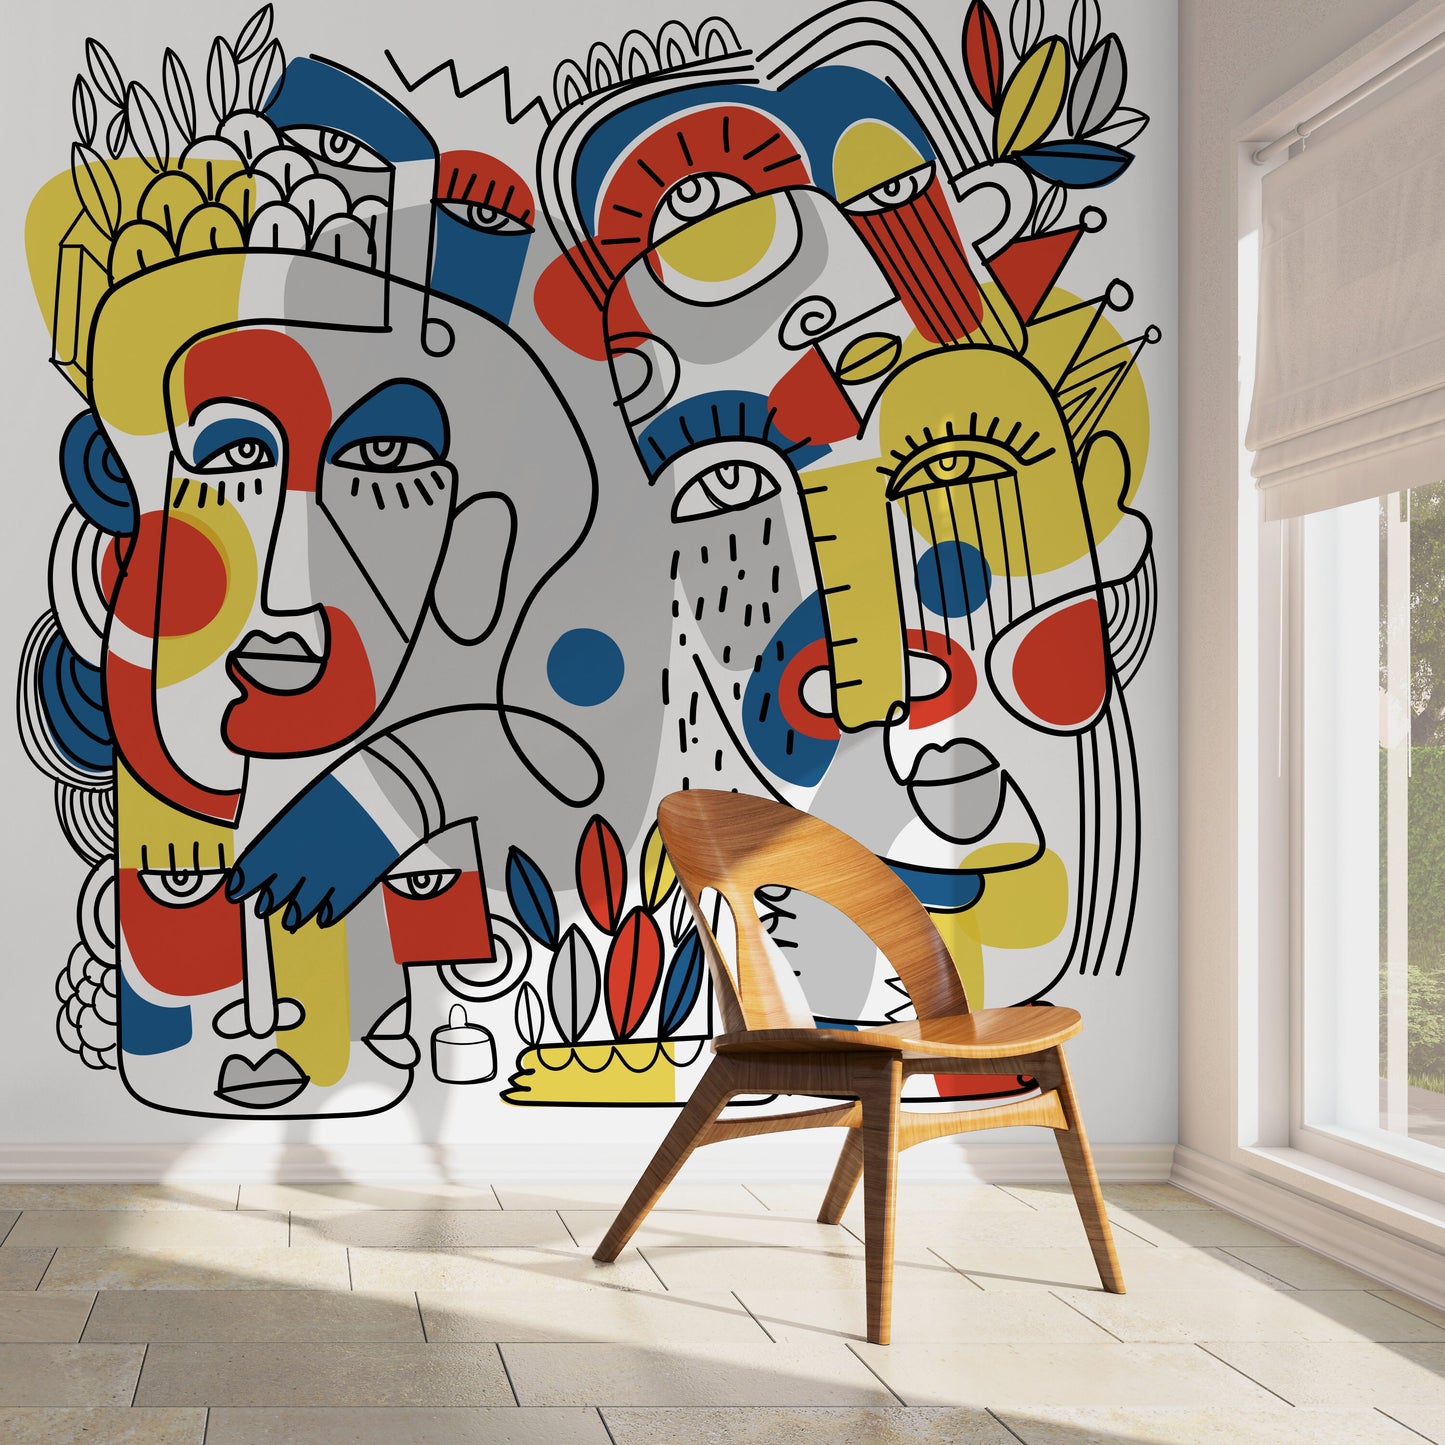 Unique Line Art Faces Wallpaper Abstract Mural Peel and Stick Wallpaper Home Decor - D556